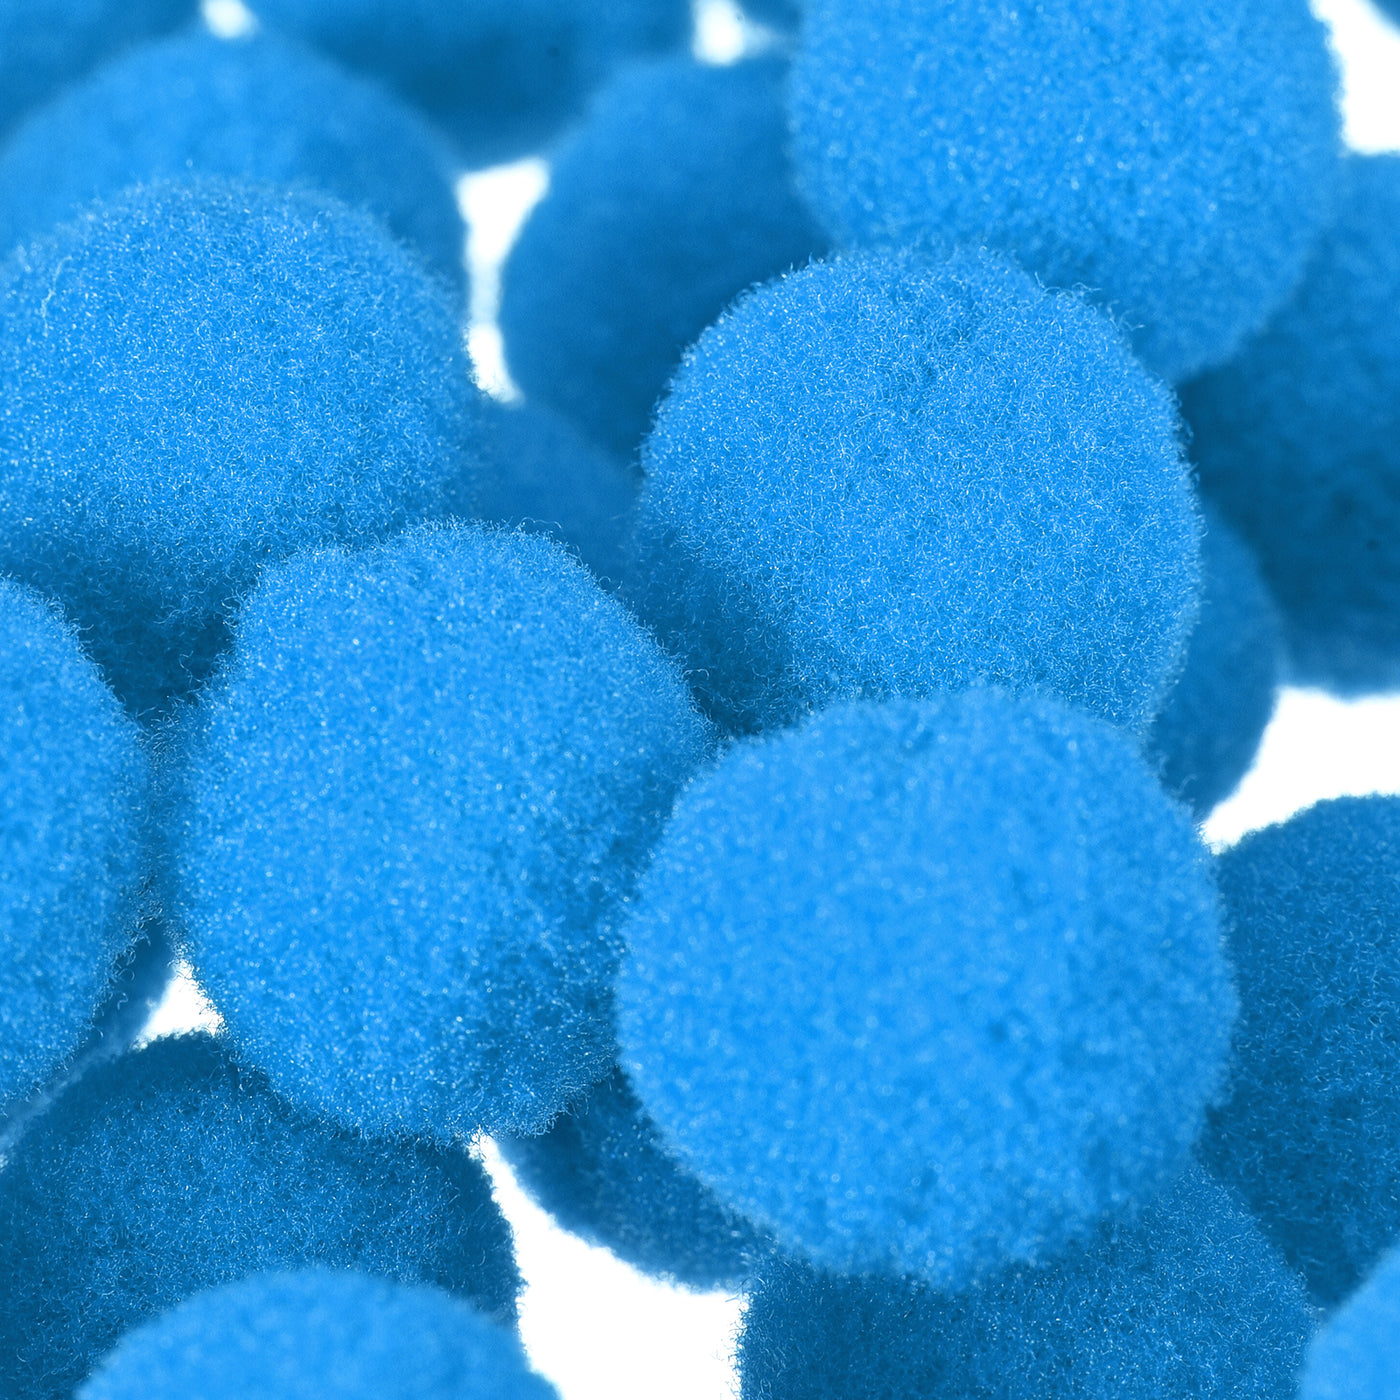 Harfington Pom Felt Balls Fabric 1.5cm 15mm Blue for Craft Project DIY 100 Pcs